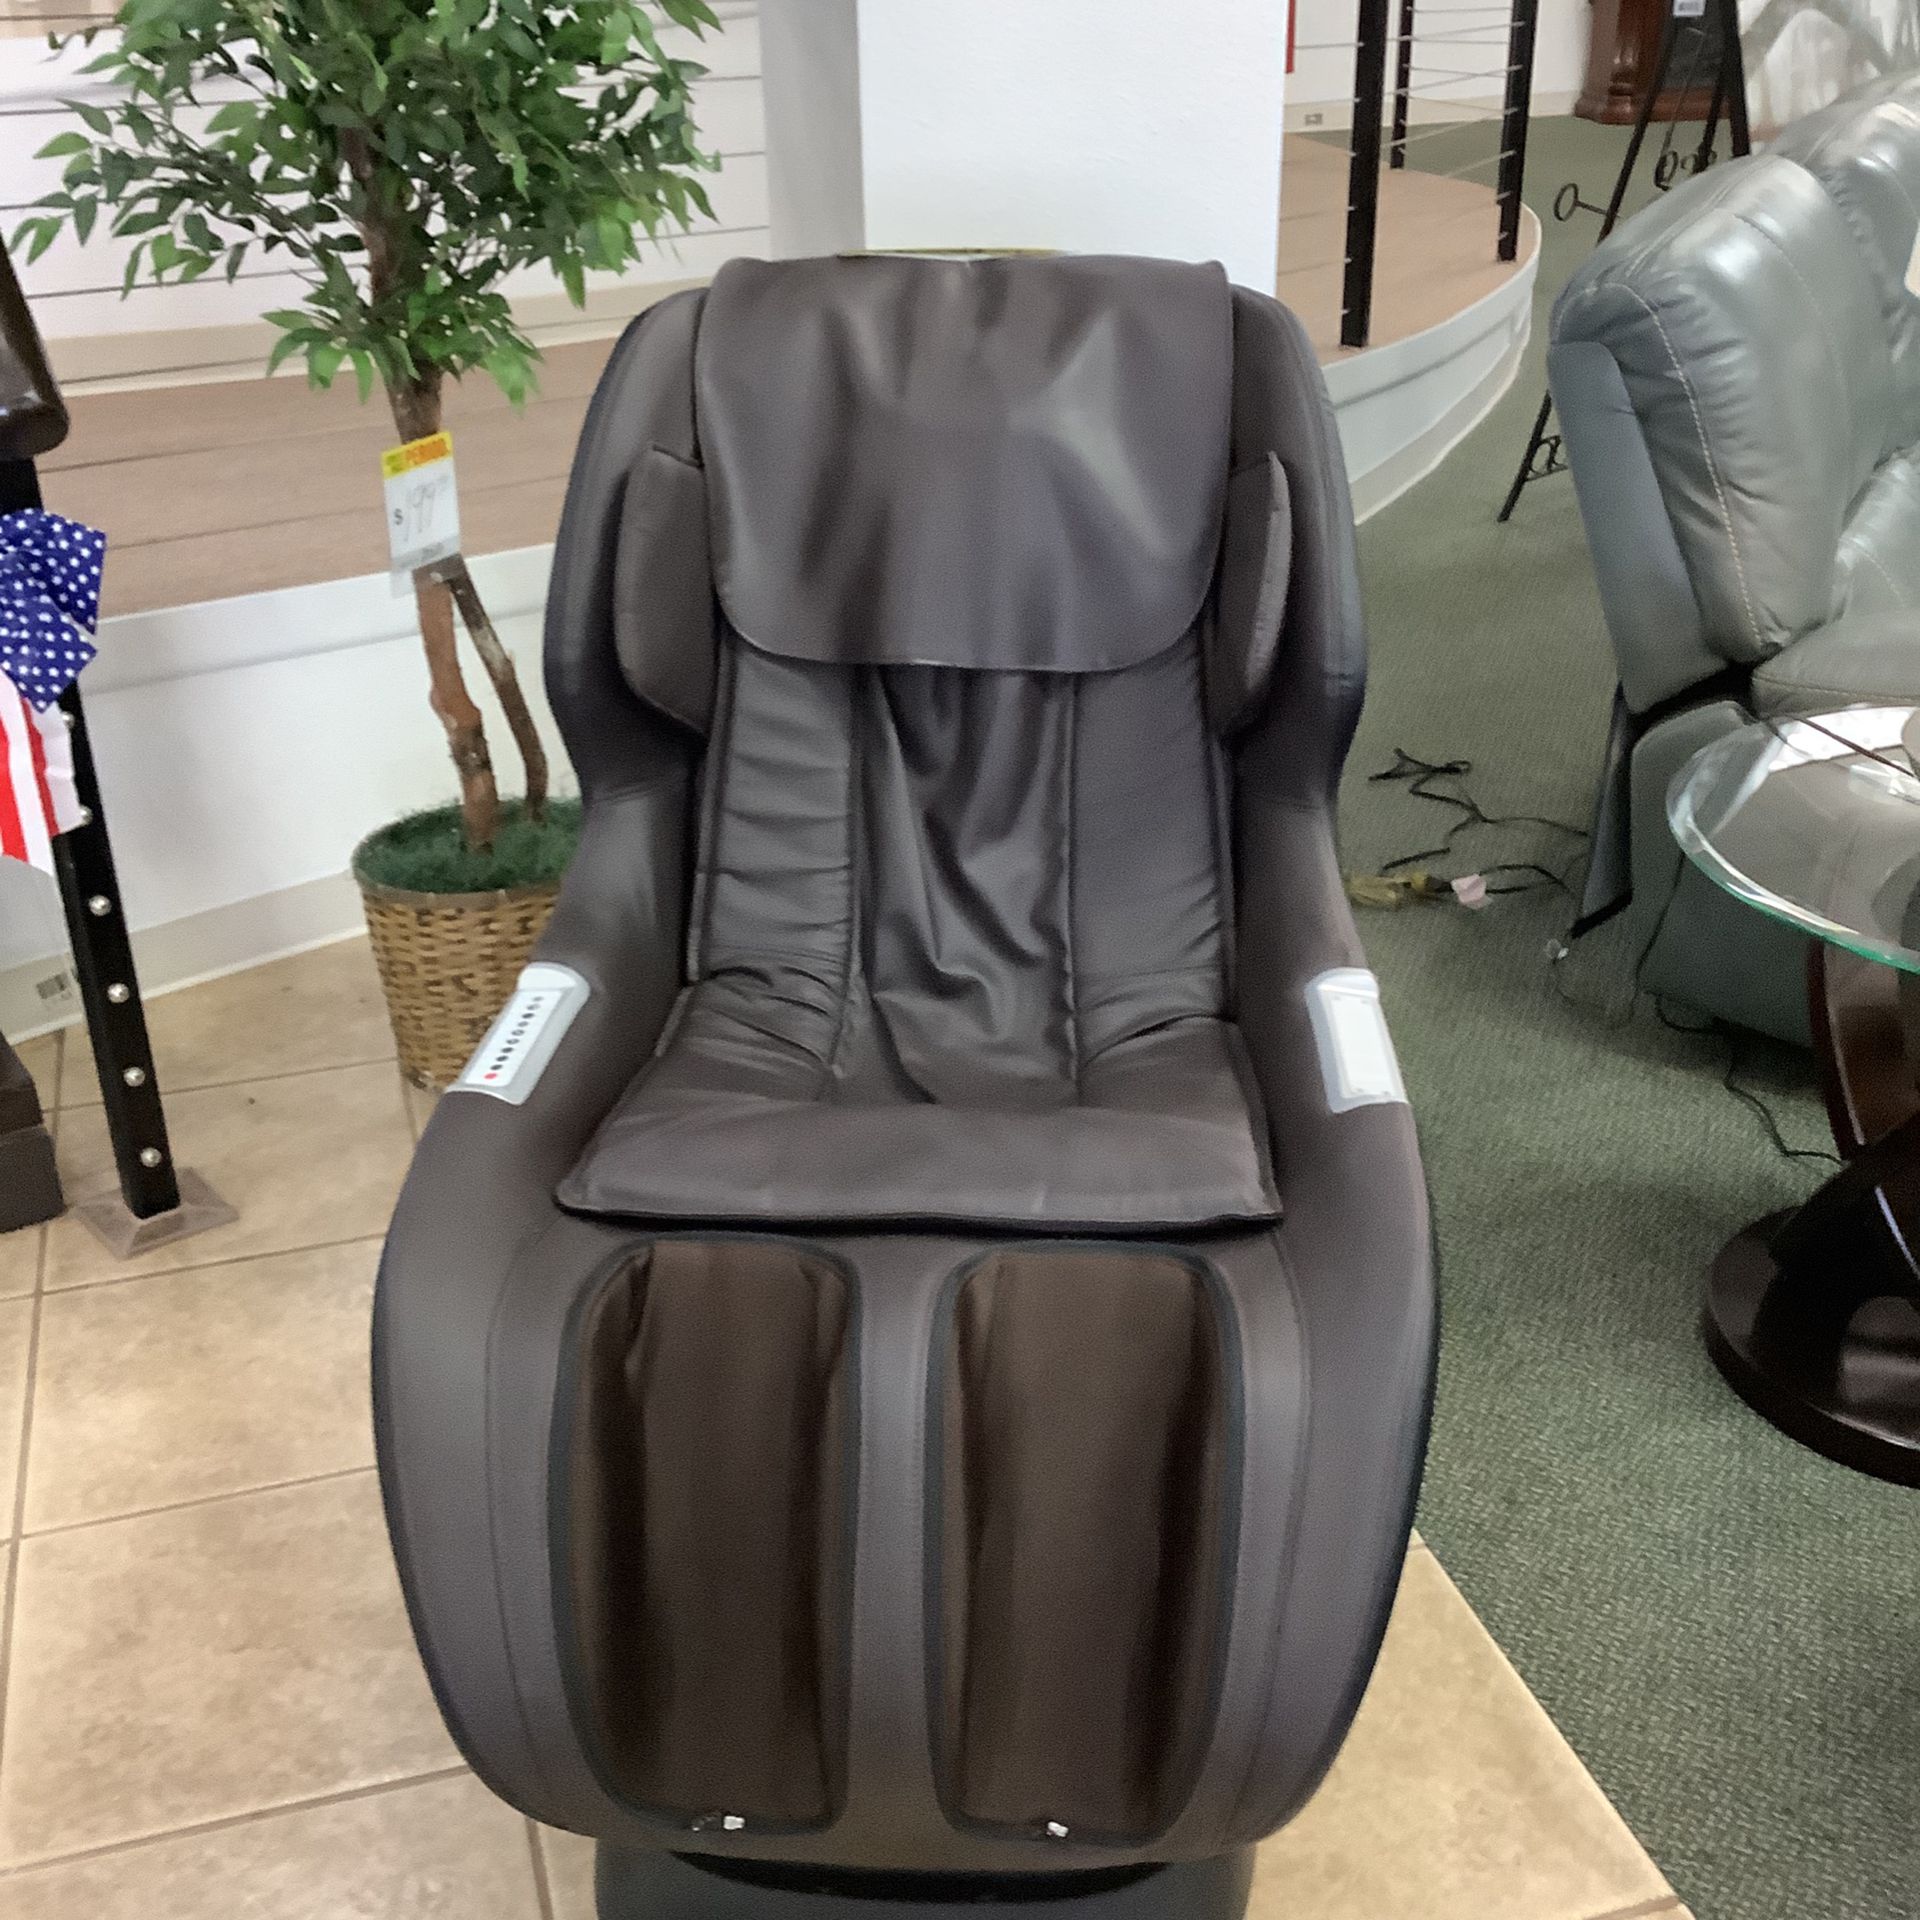 Full body massage chair